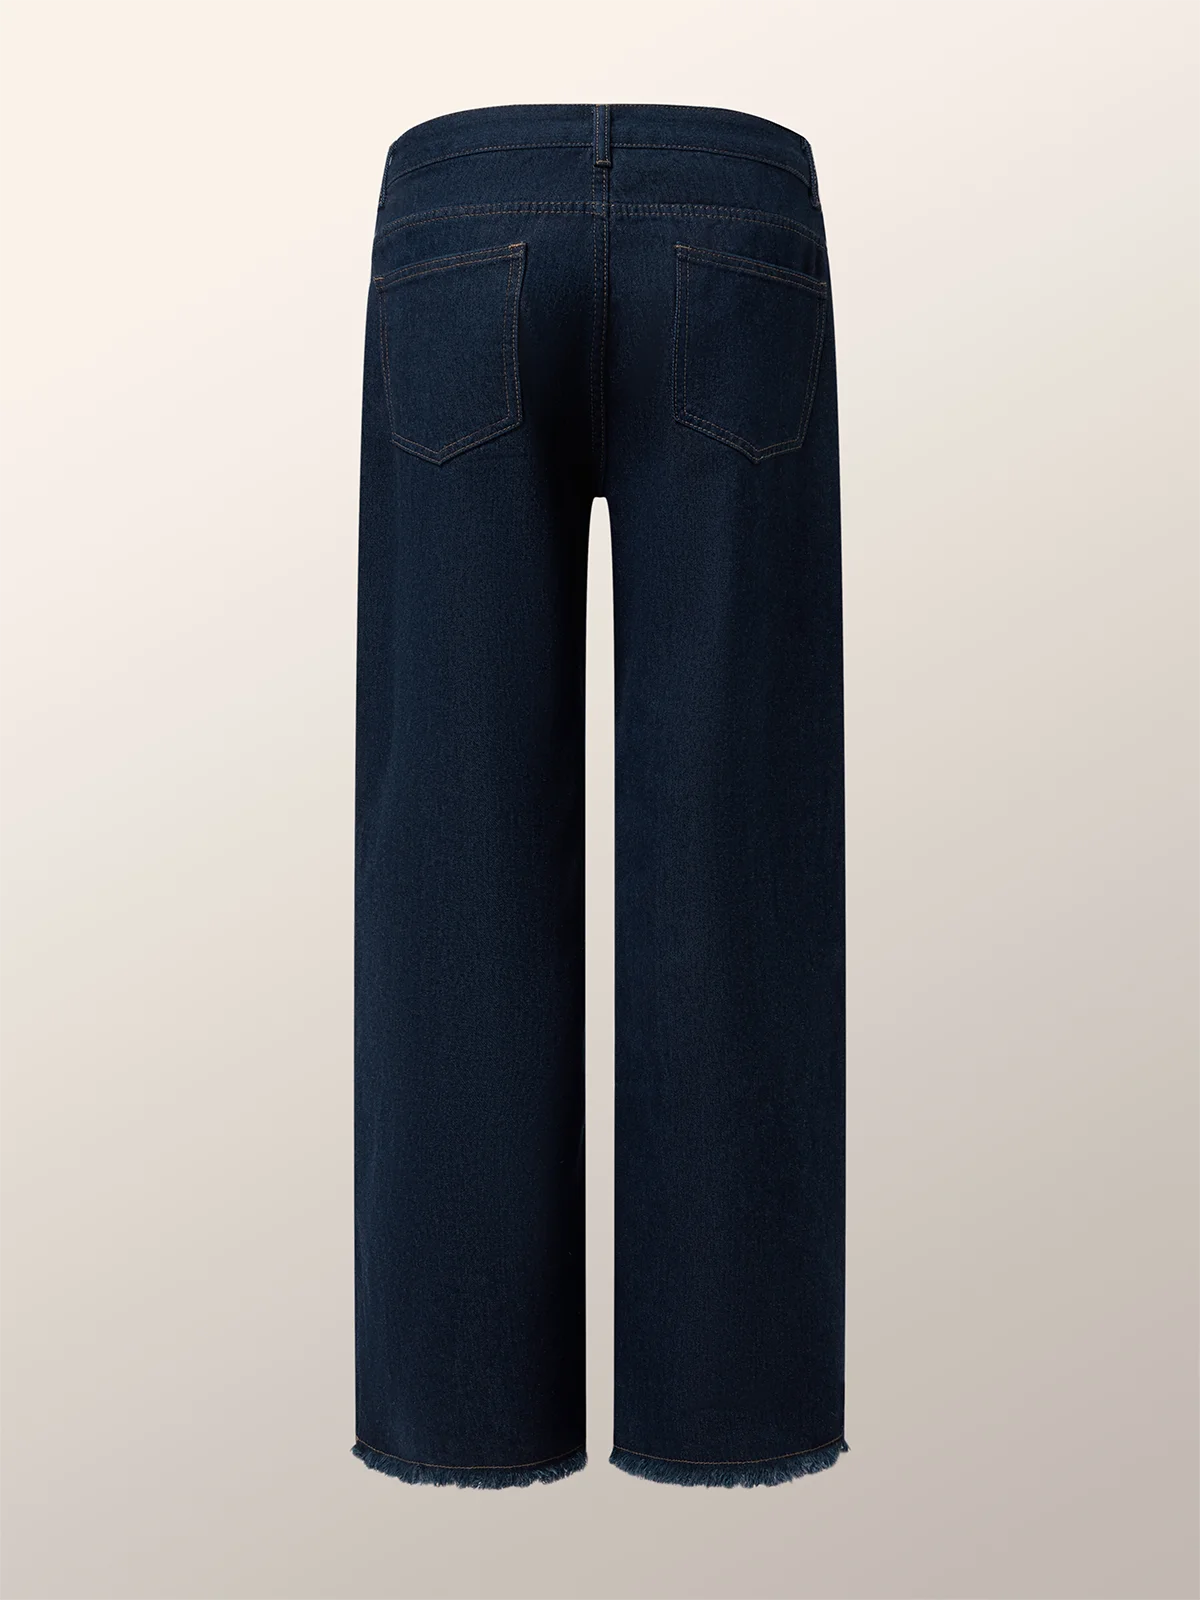 Urban Loose Heavyweight Denim Long Jeans Straight pants